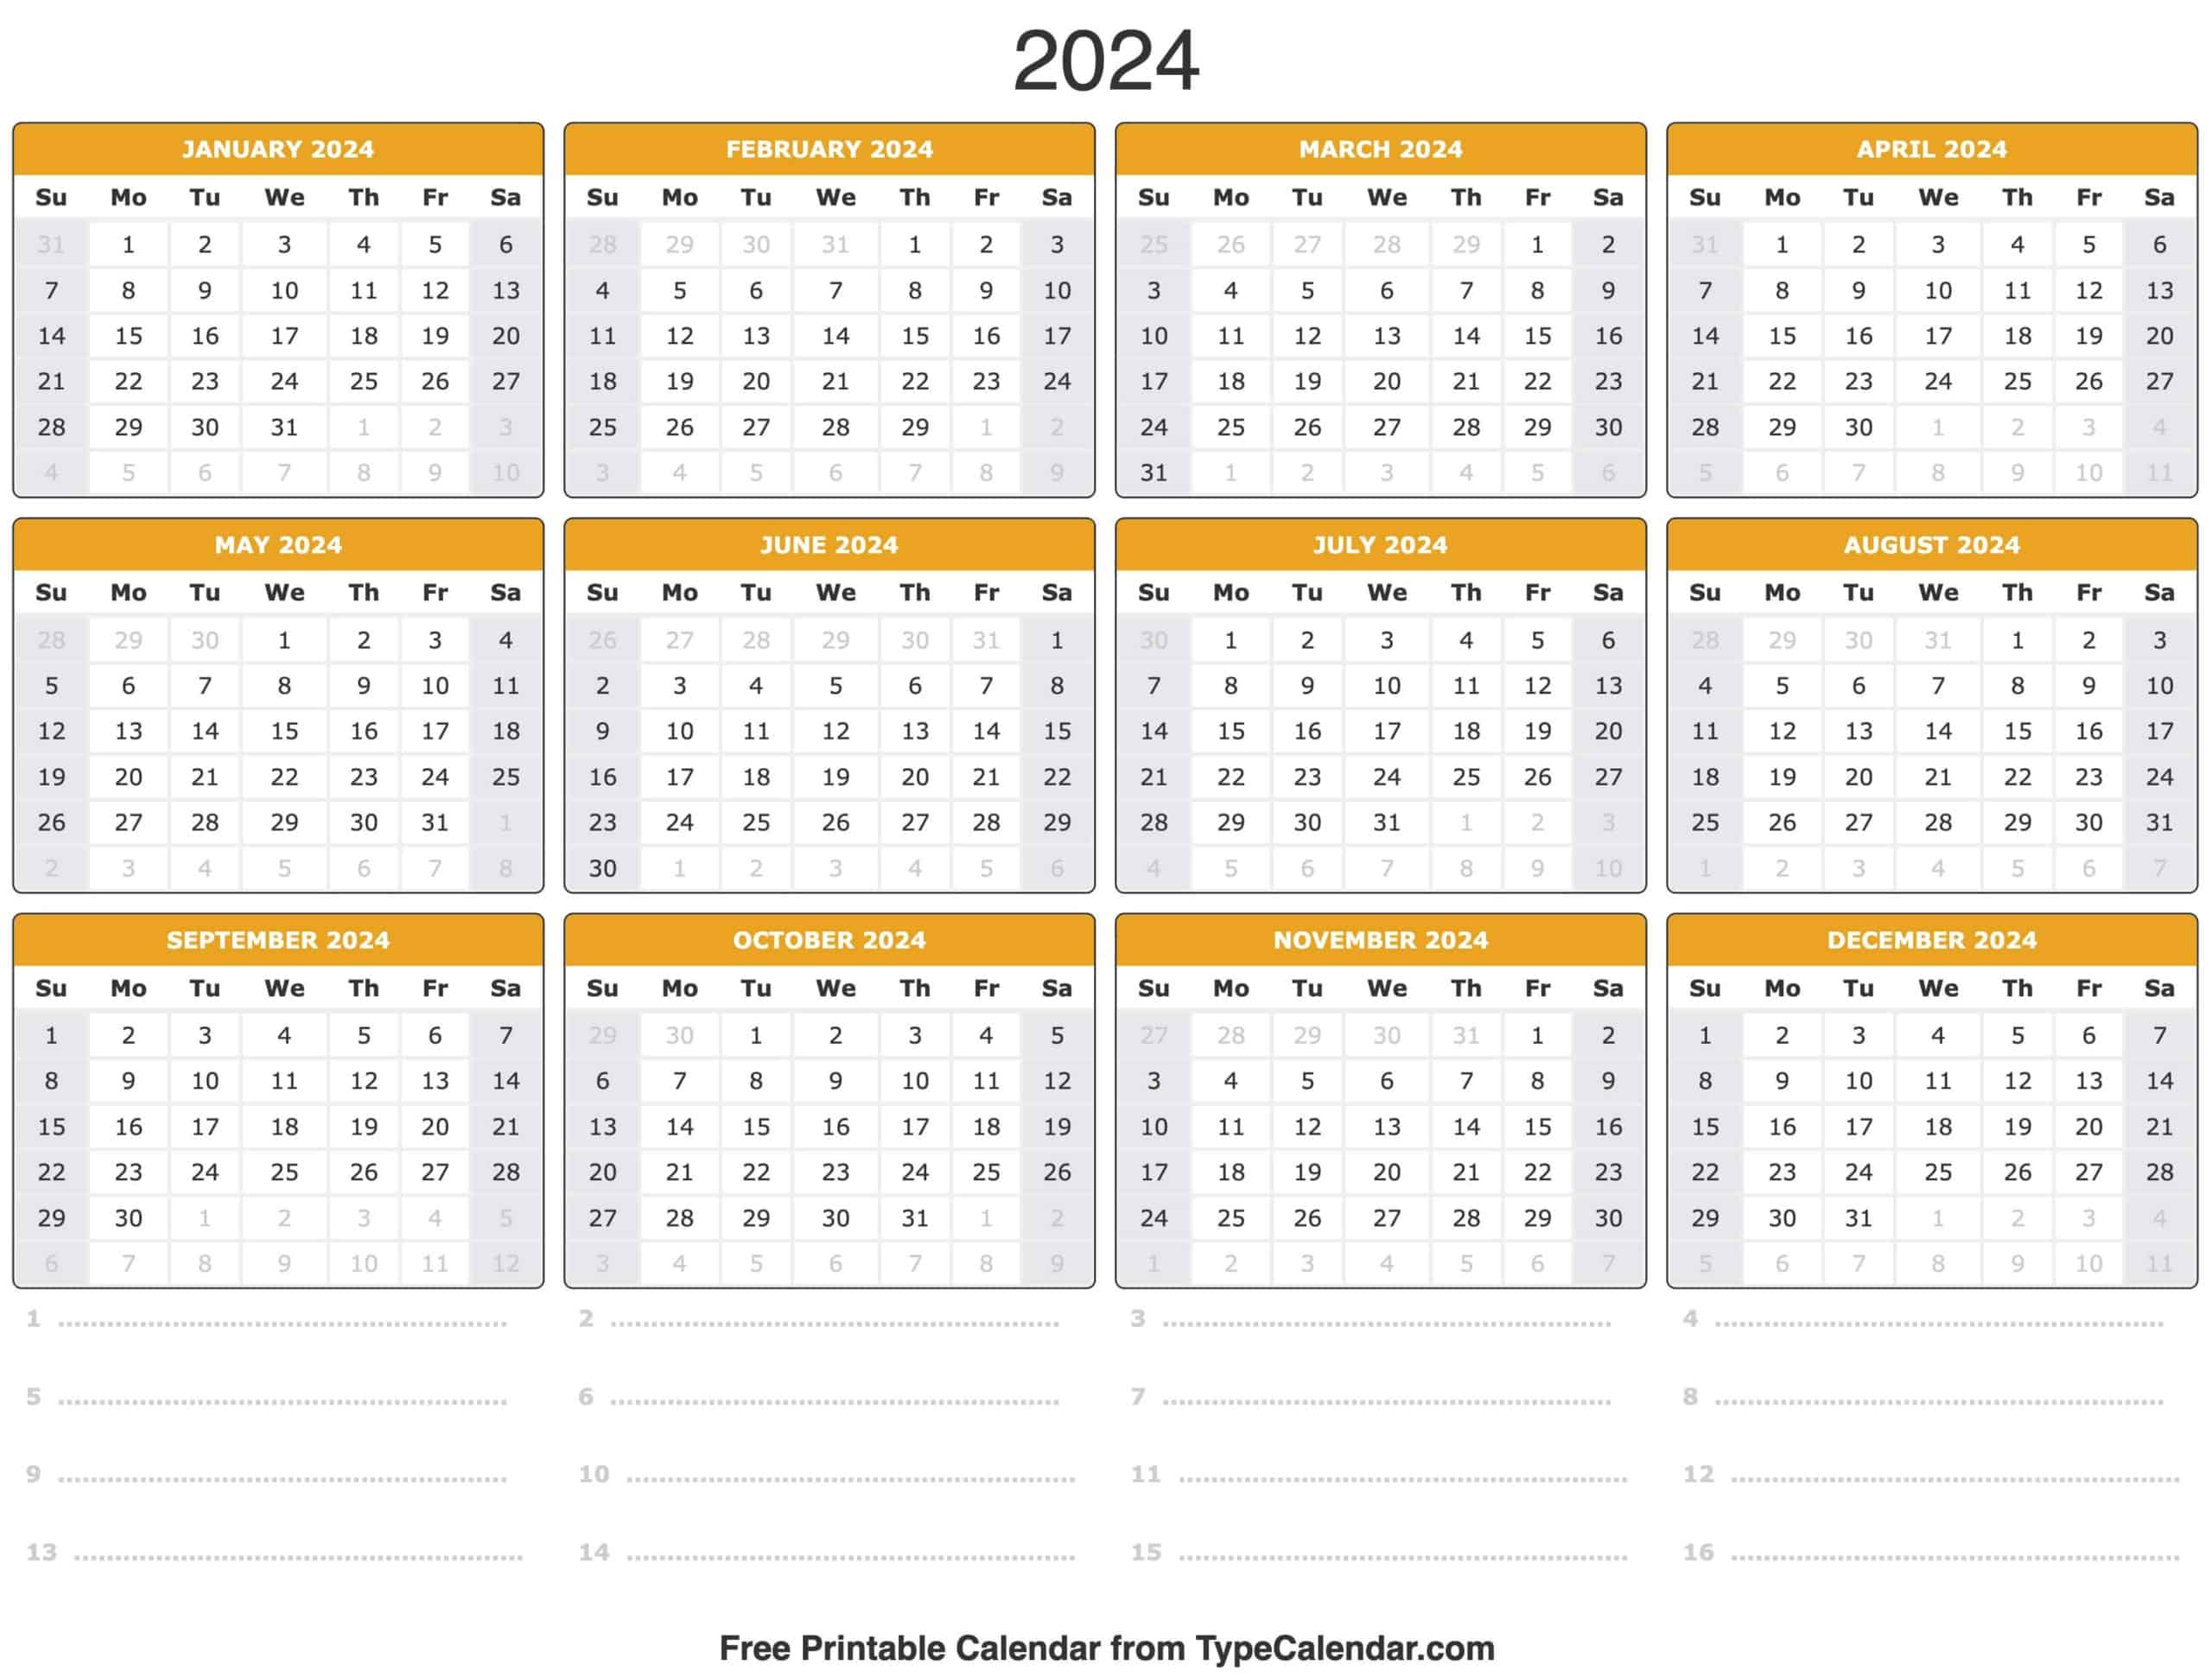 2024 Calendar: Free Printable Calendar With Holidays | Weekly 2024 Calendar